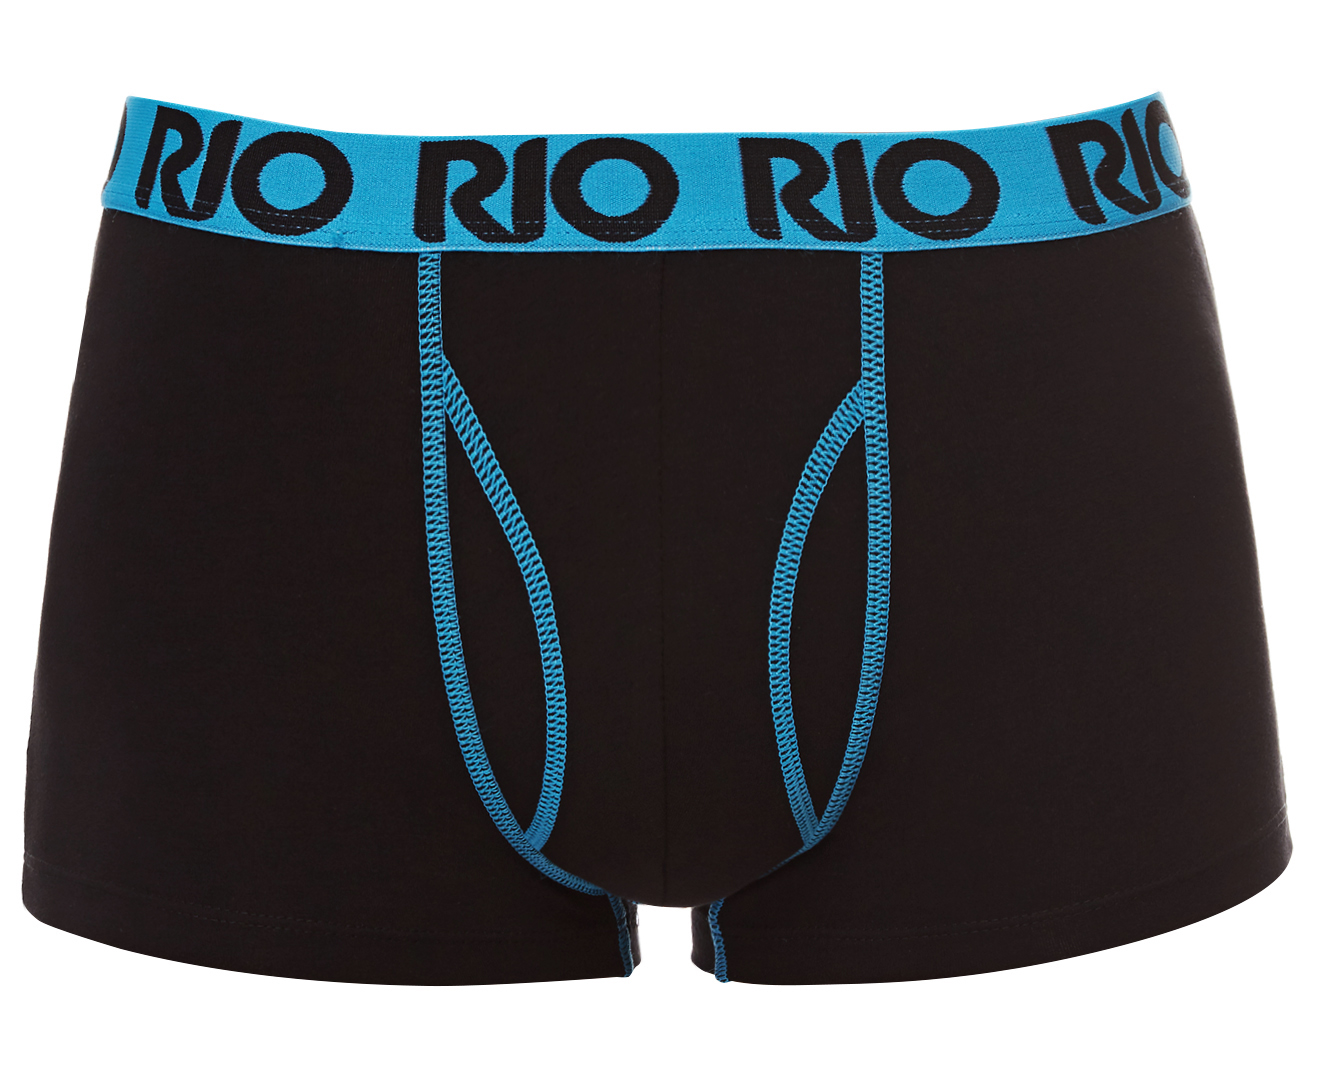 Rio men favourite trunks cotton stretch briefs boxer short underwear my7e2w  1 pack